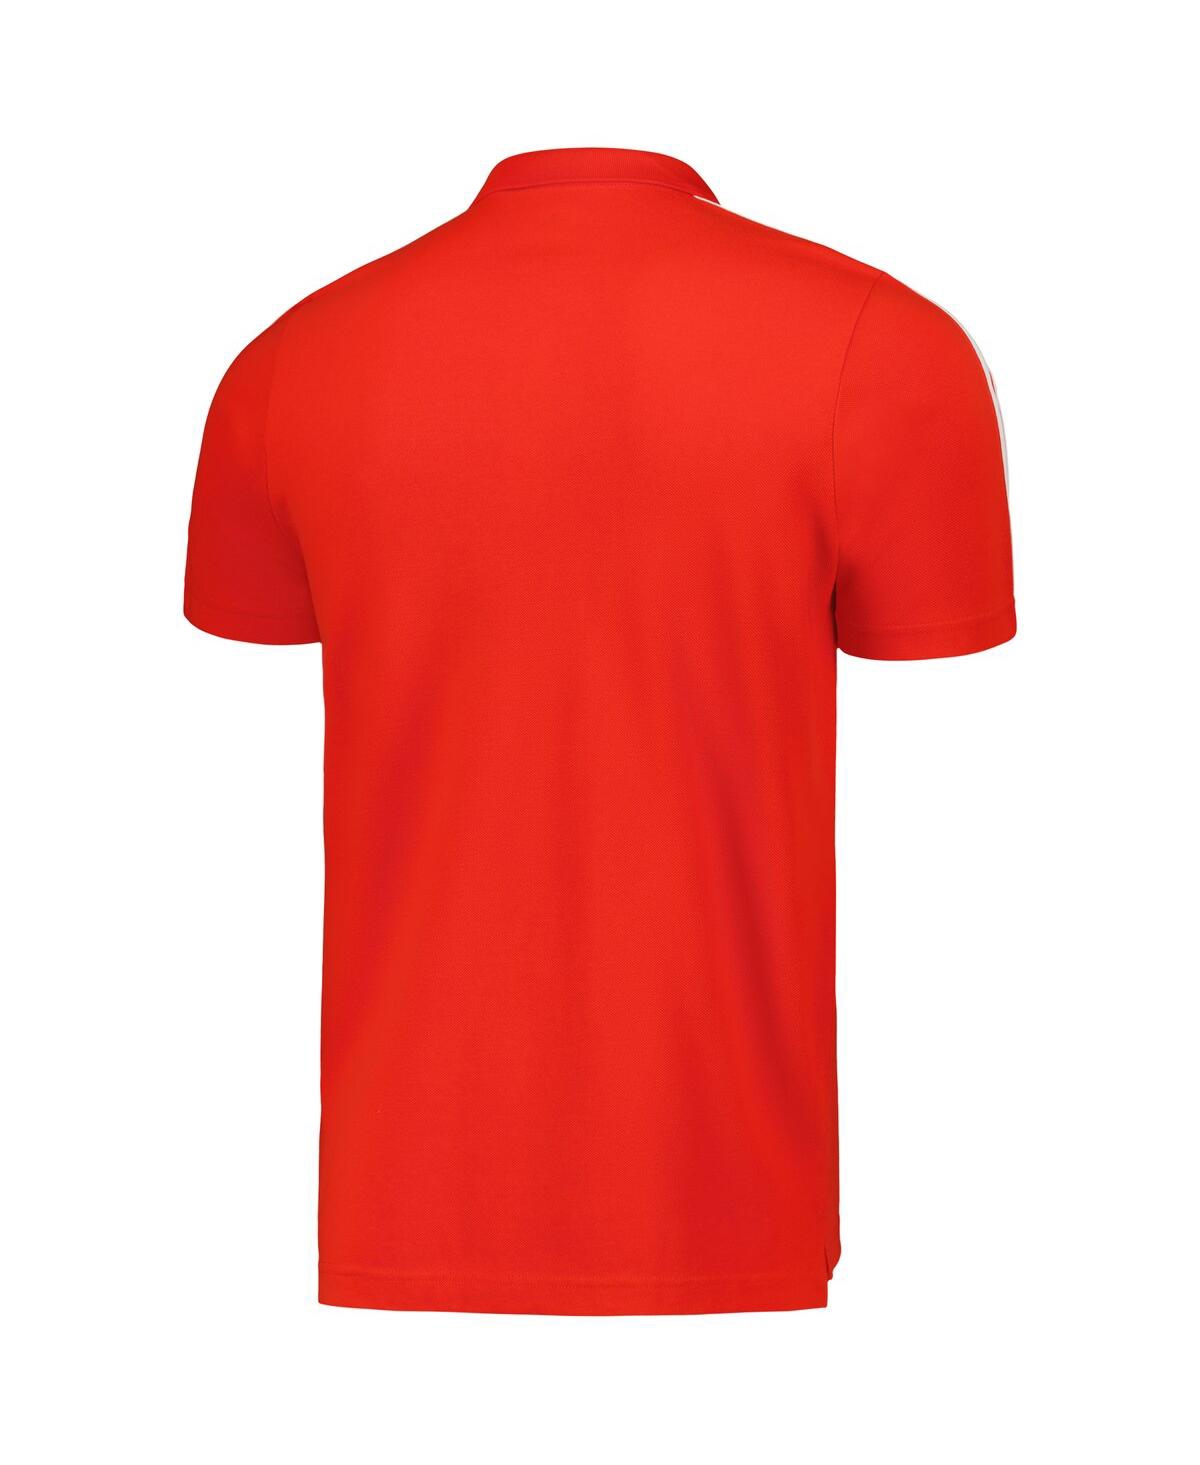 Shop Adidas Originals Men's Adidas Red Bayern Munich 2023/24 Dna Polo Shirt